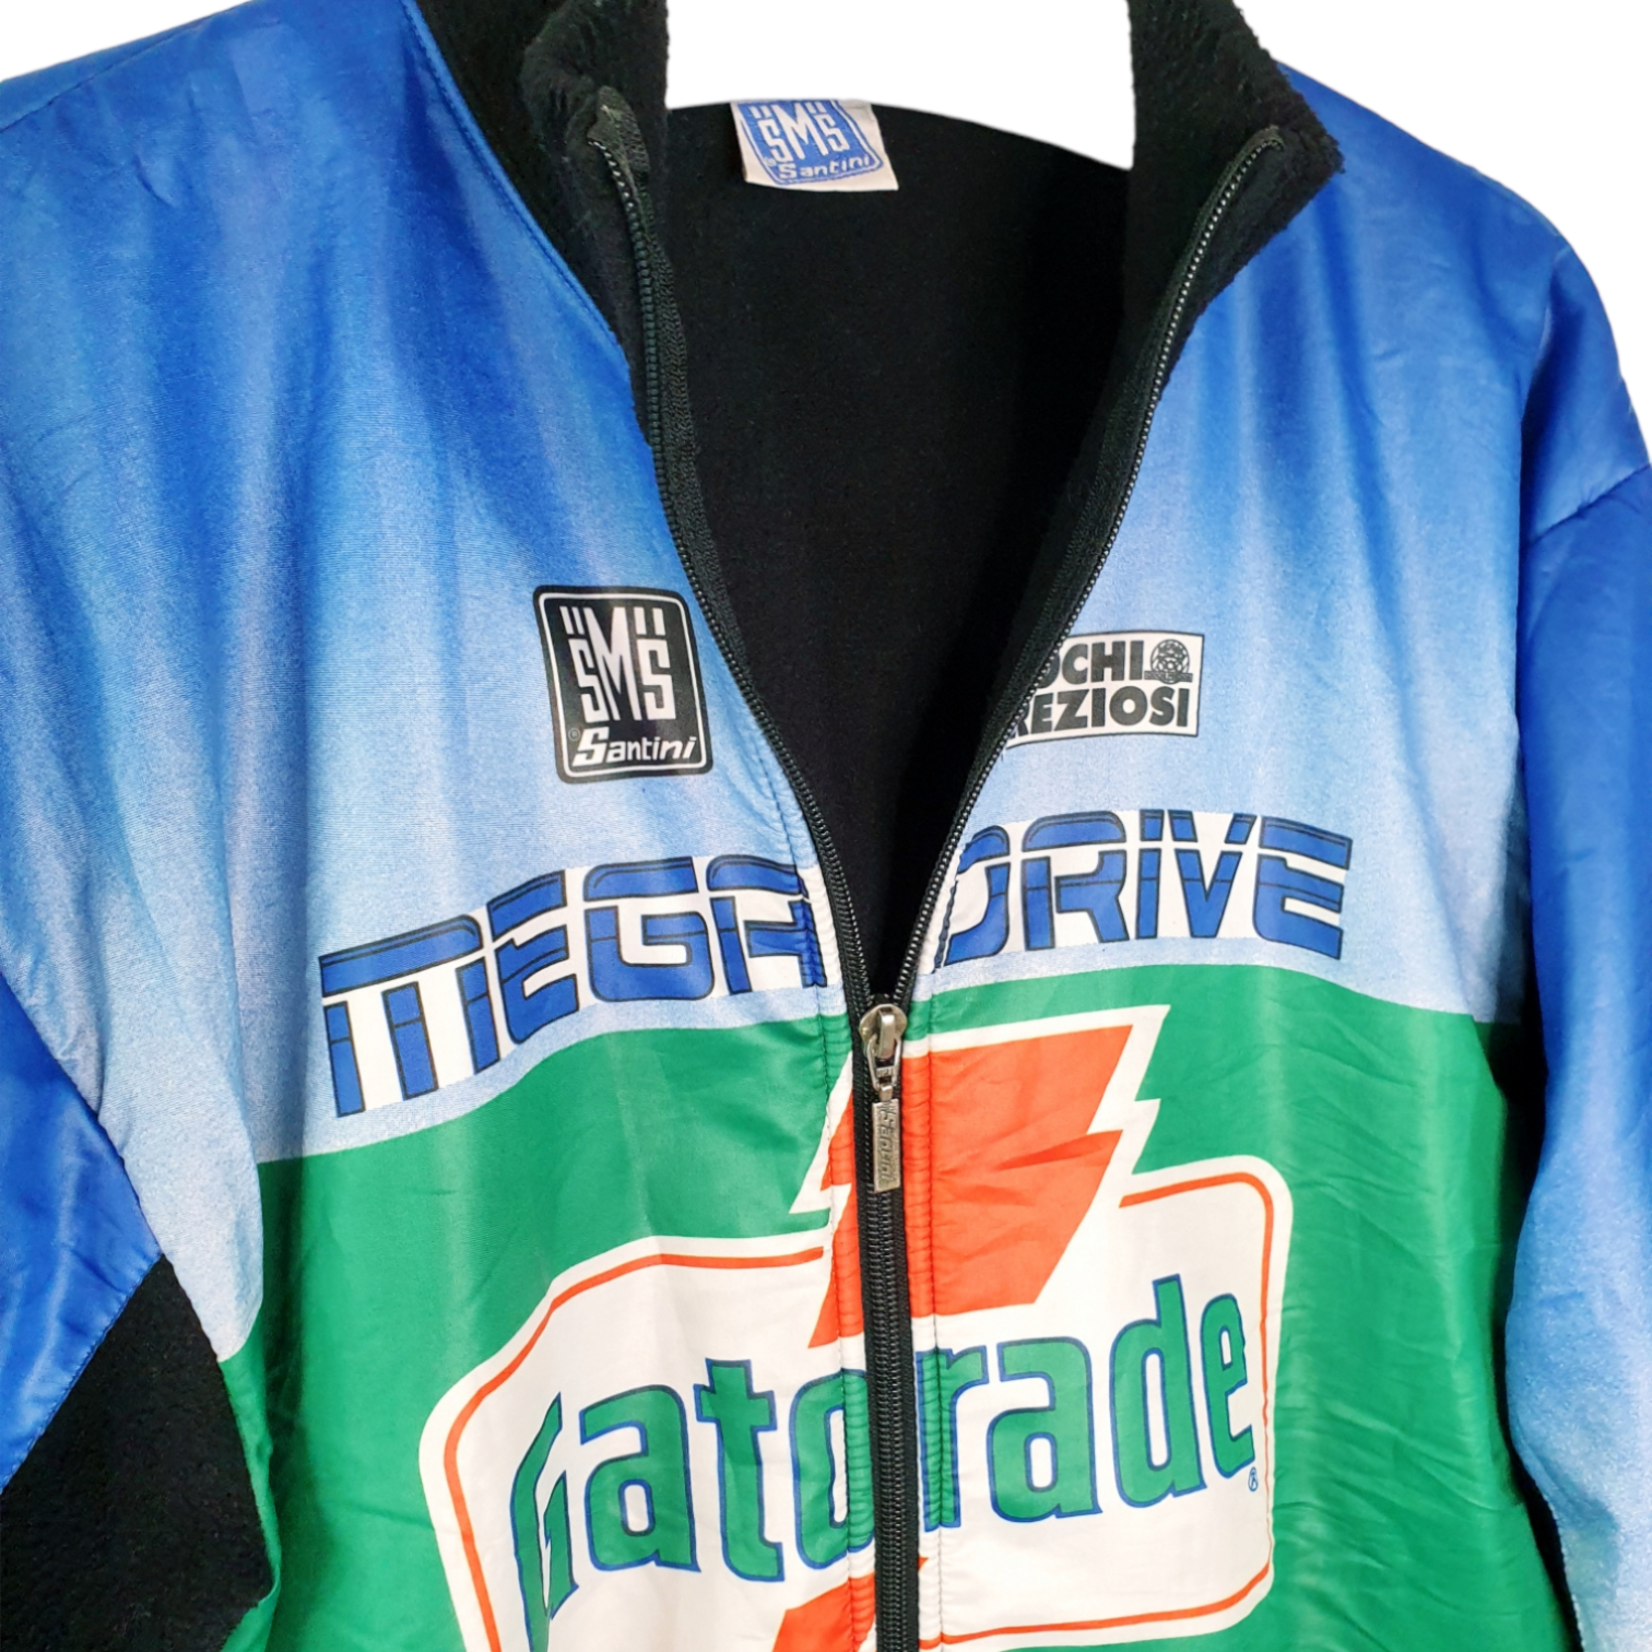 SMS Santini SMS Santini vintage cycling jacket Gatorade - Mega Drive - Kenwood 1993